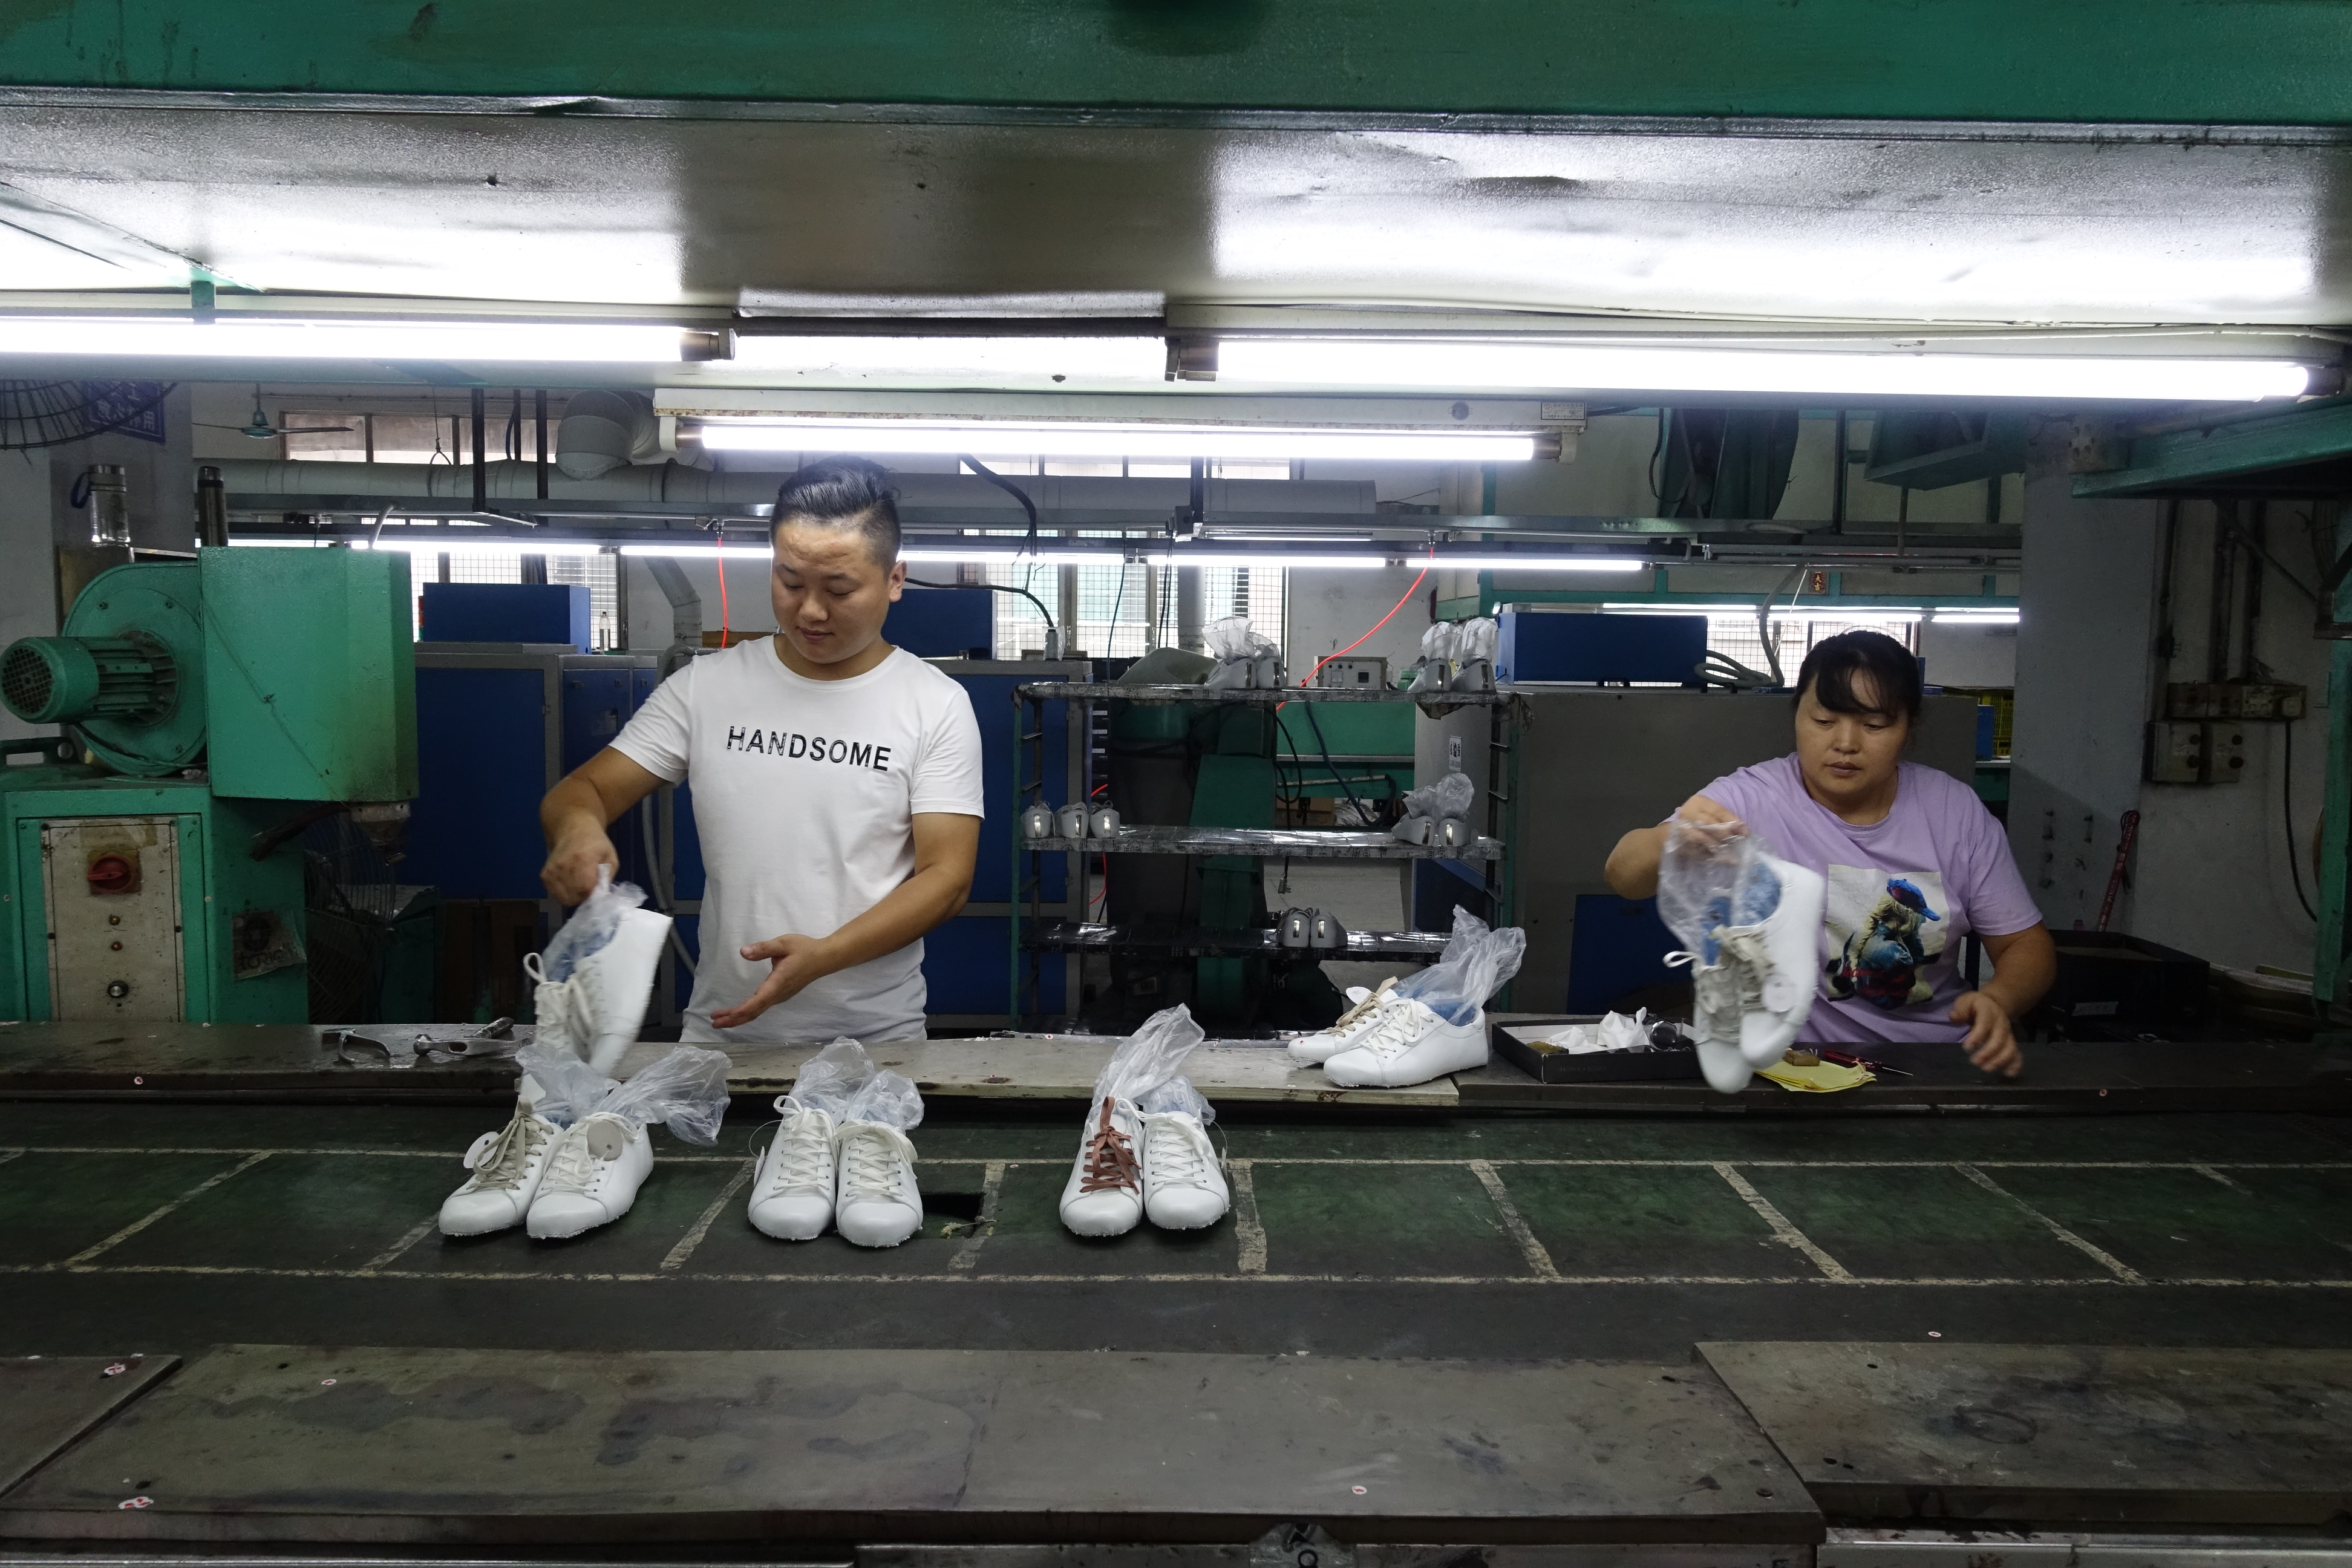 chinese shoe vendors